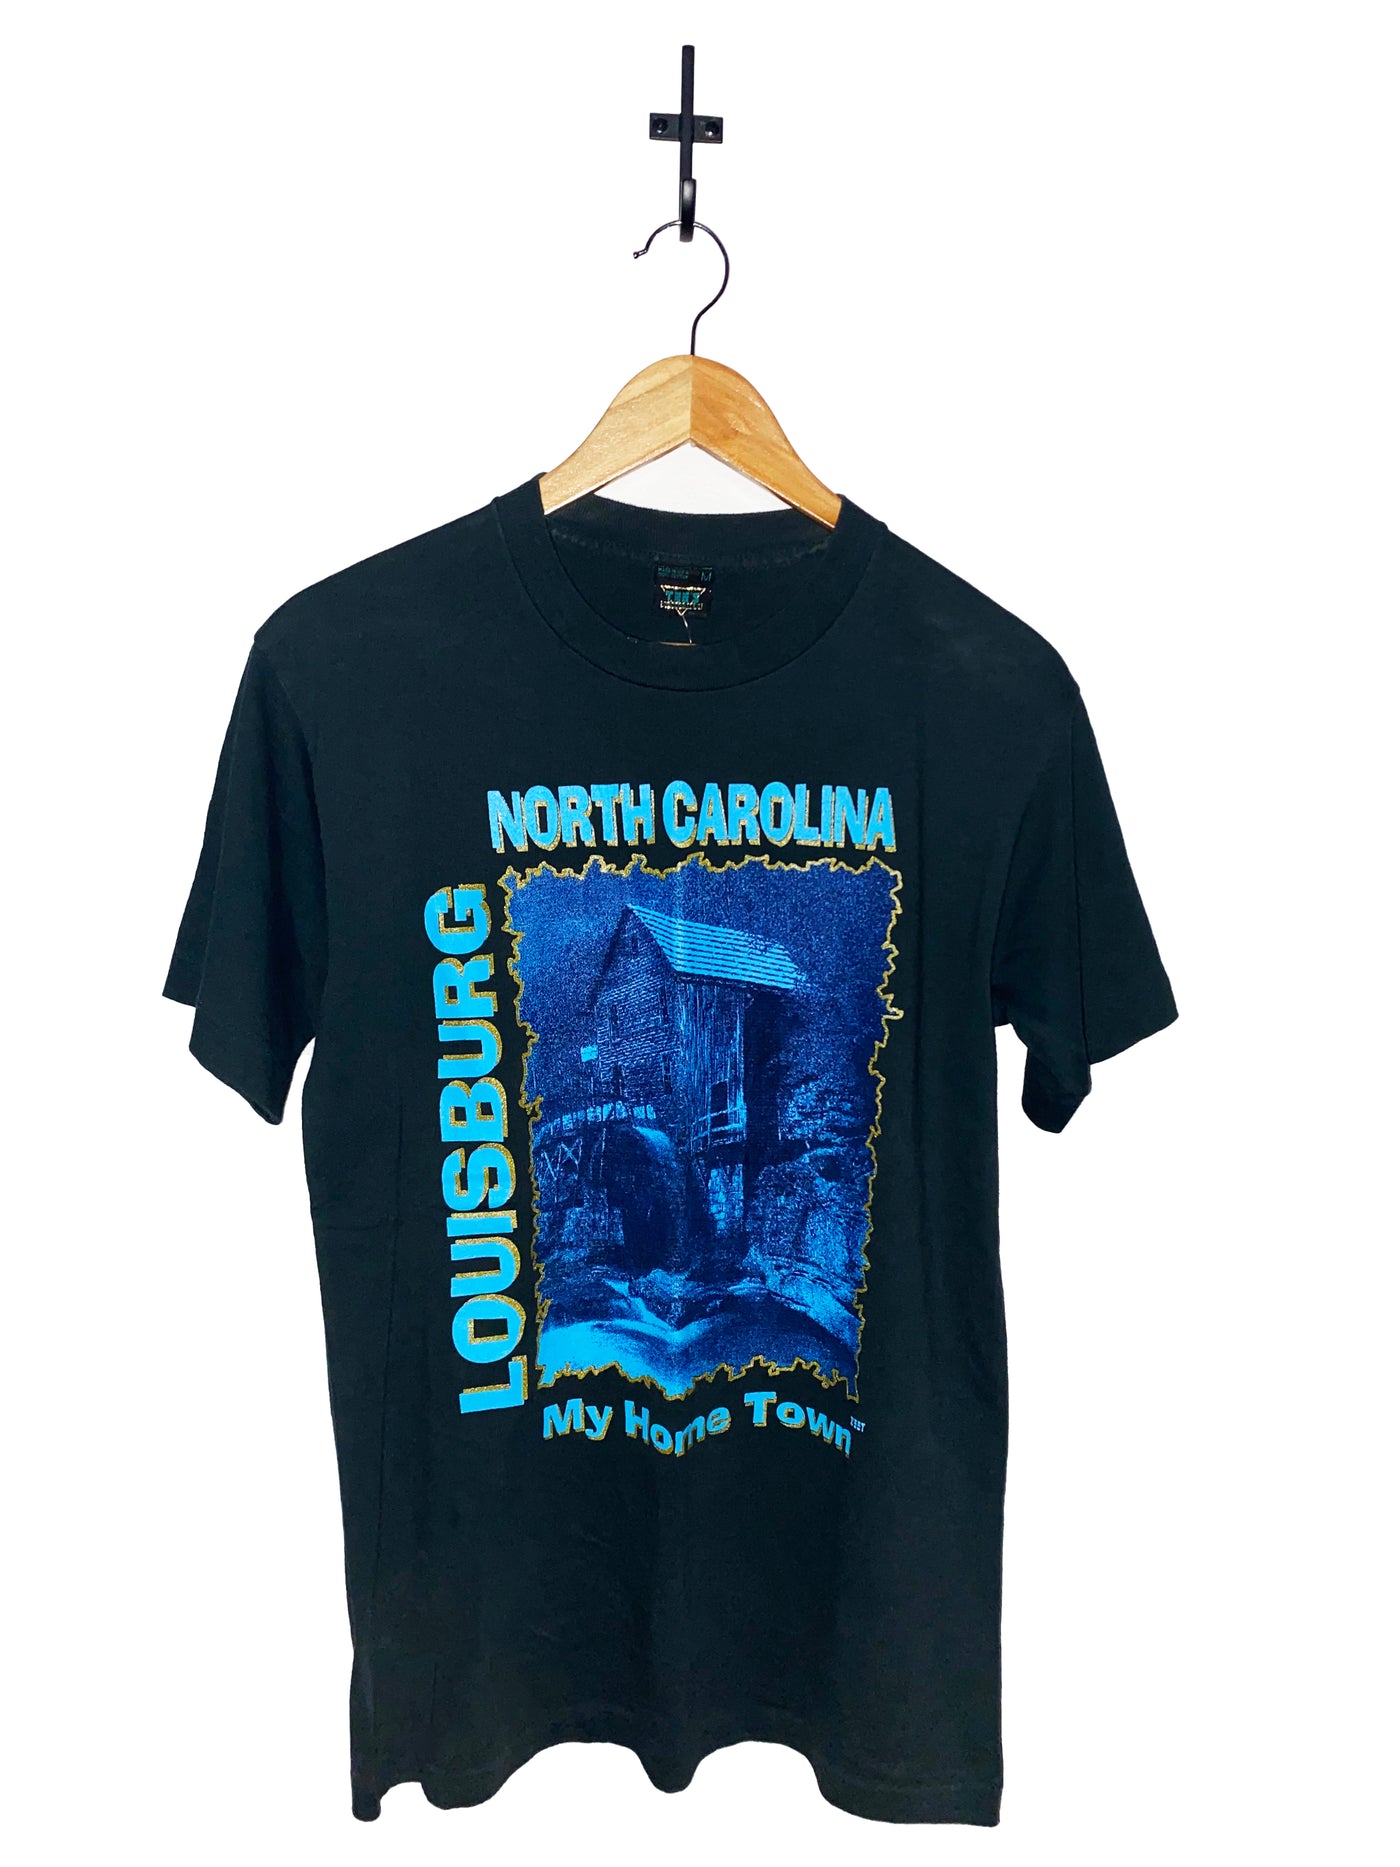 Vintage North Carolina ‘My Hometown’ T-Shirt